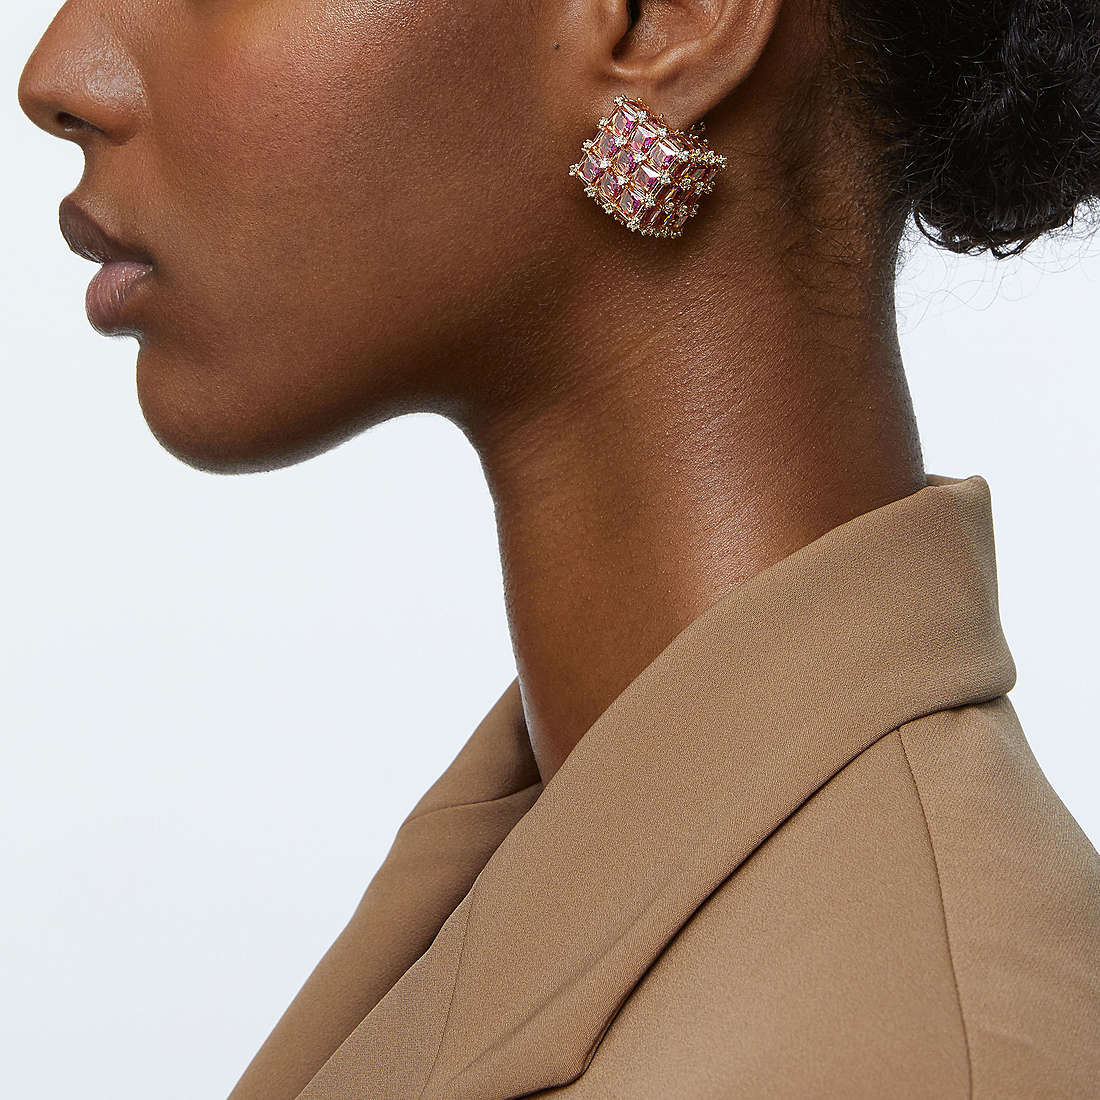 Swarovski earrings Curiosa woman 5599826 wearing